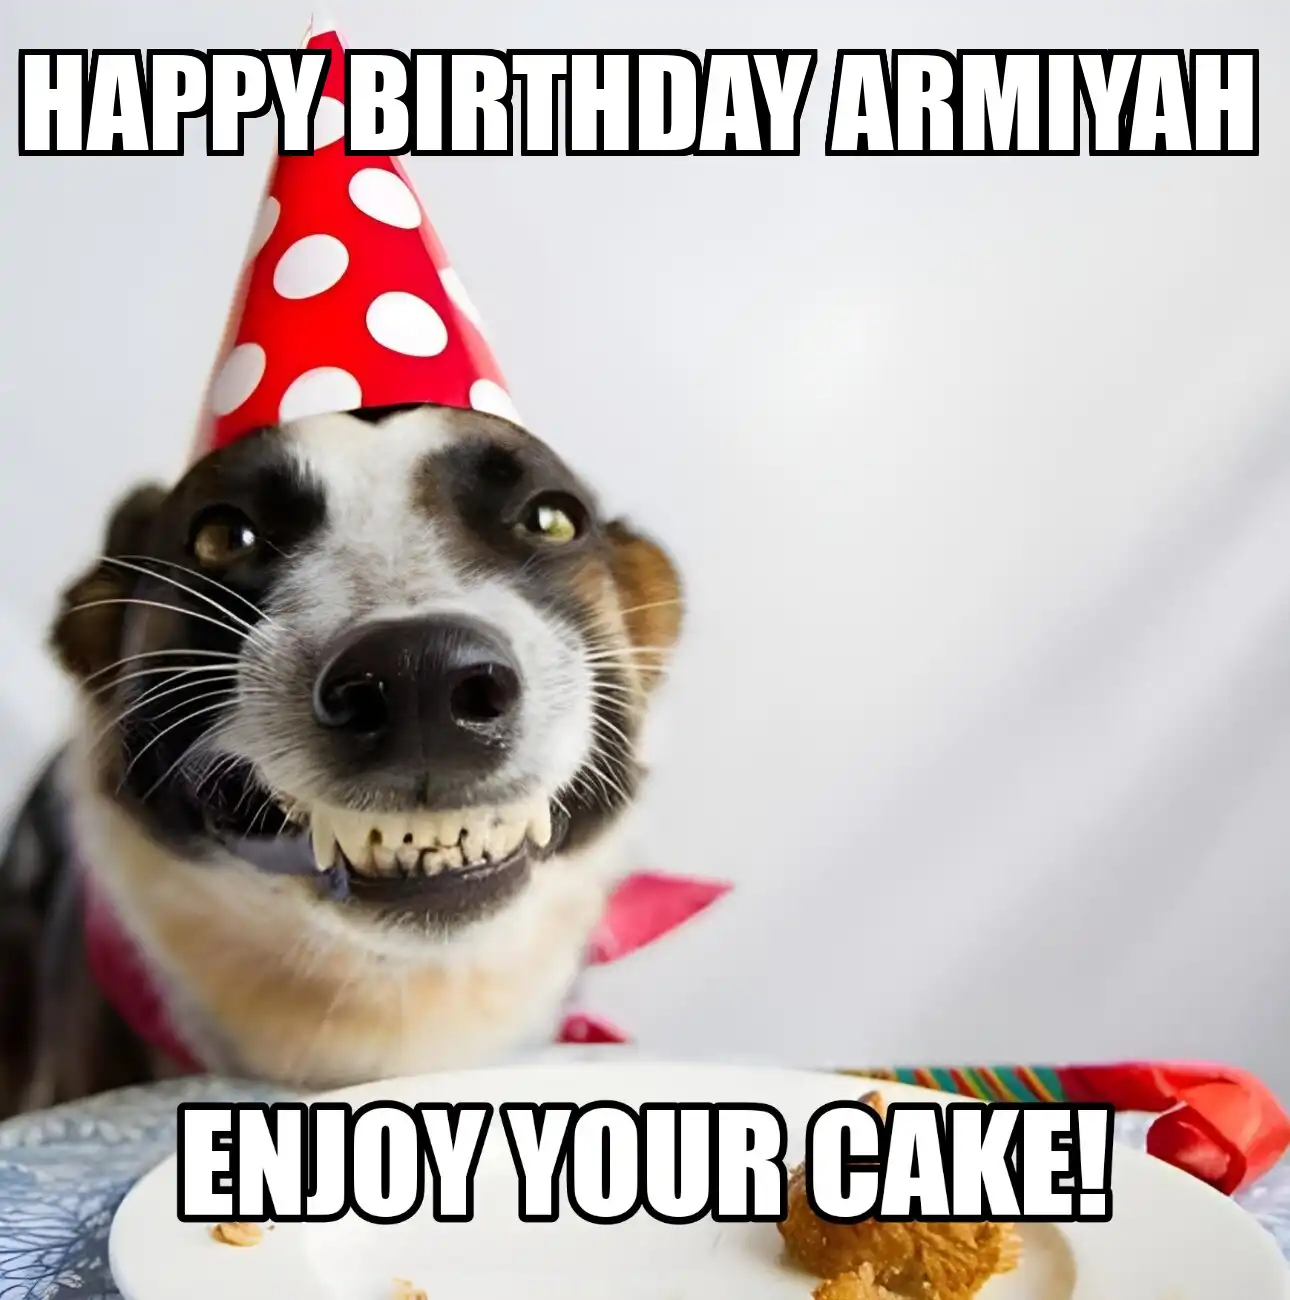 Happy Birthday Armiyah Enjoy Your Cake Dog Meme